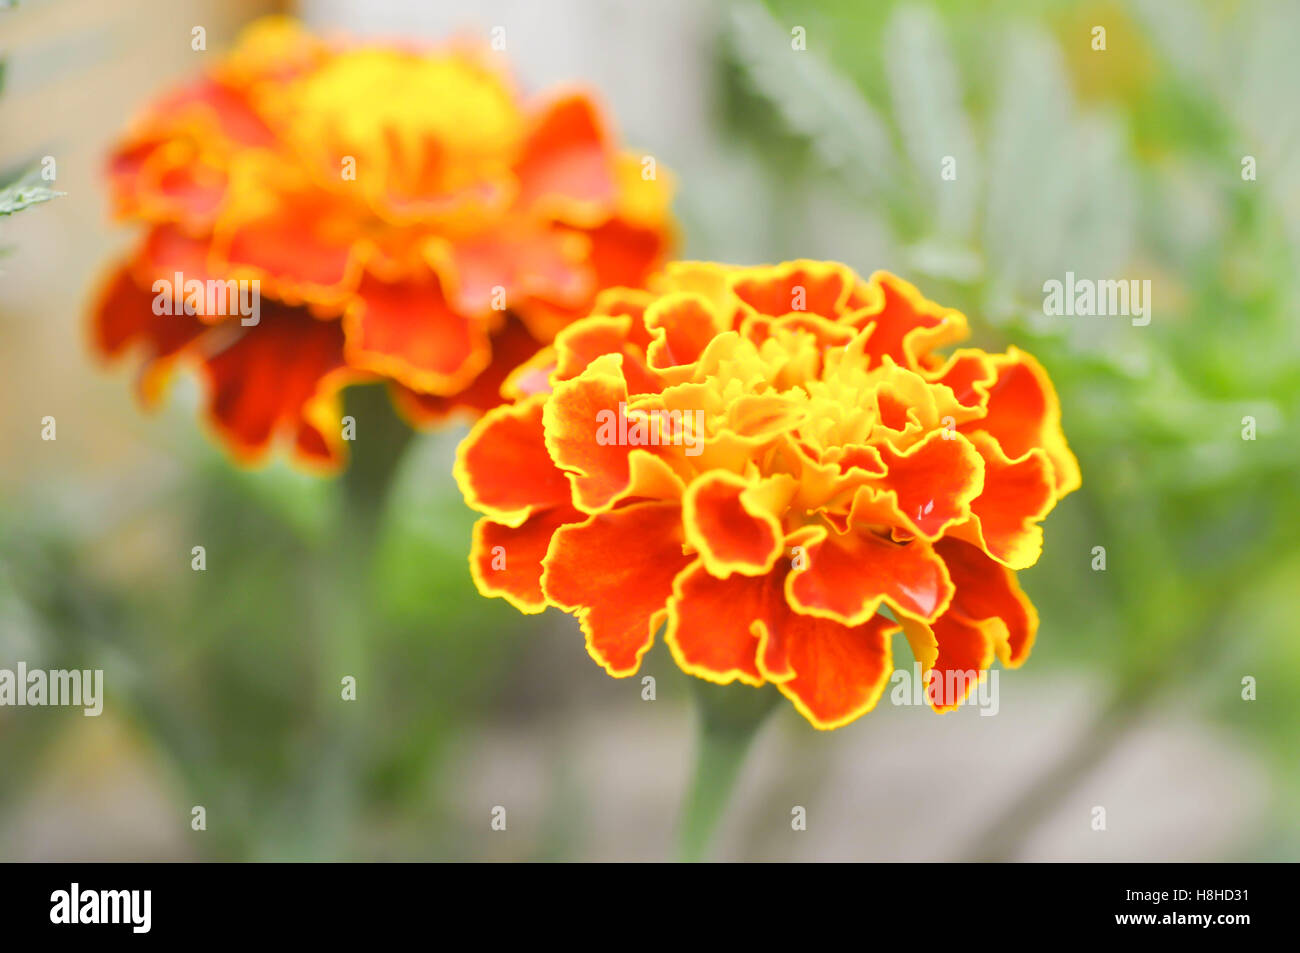 marigold or calendula flower in the garden Stock Photo